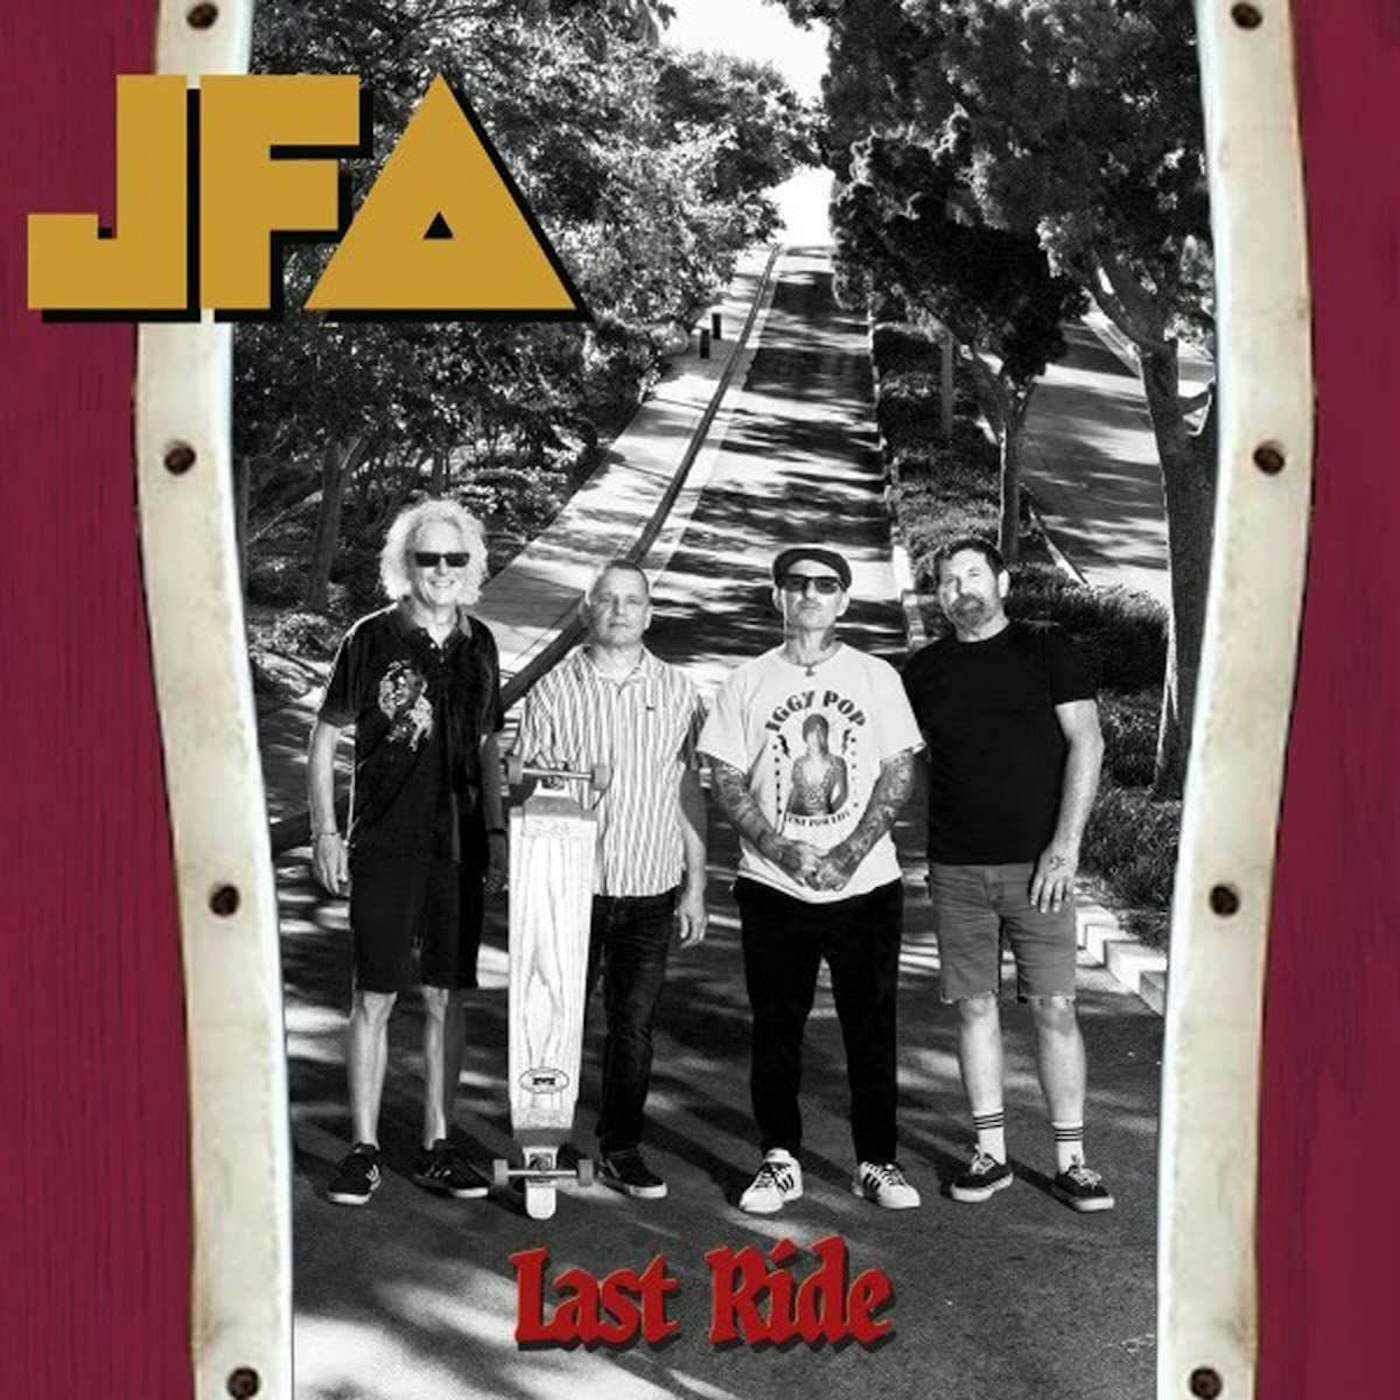 JFA LAST RIDE Vinyl Record